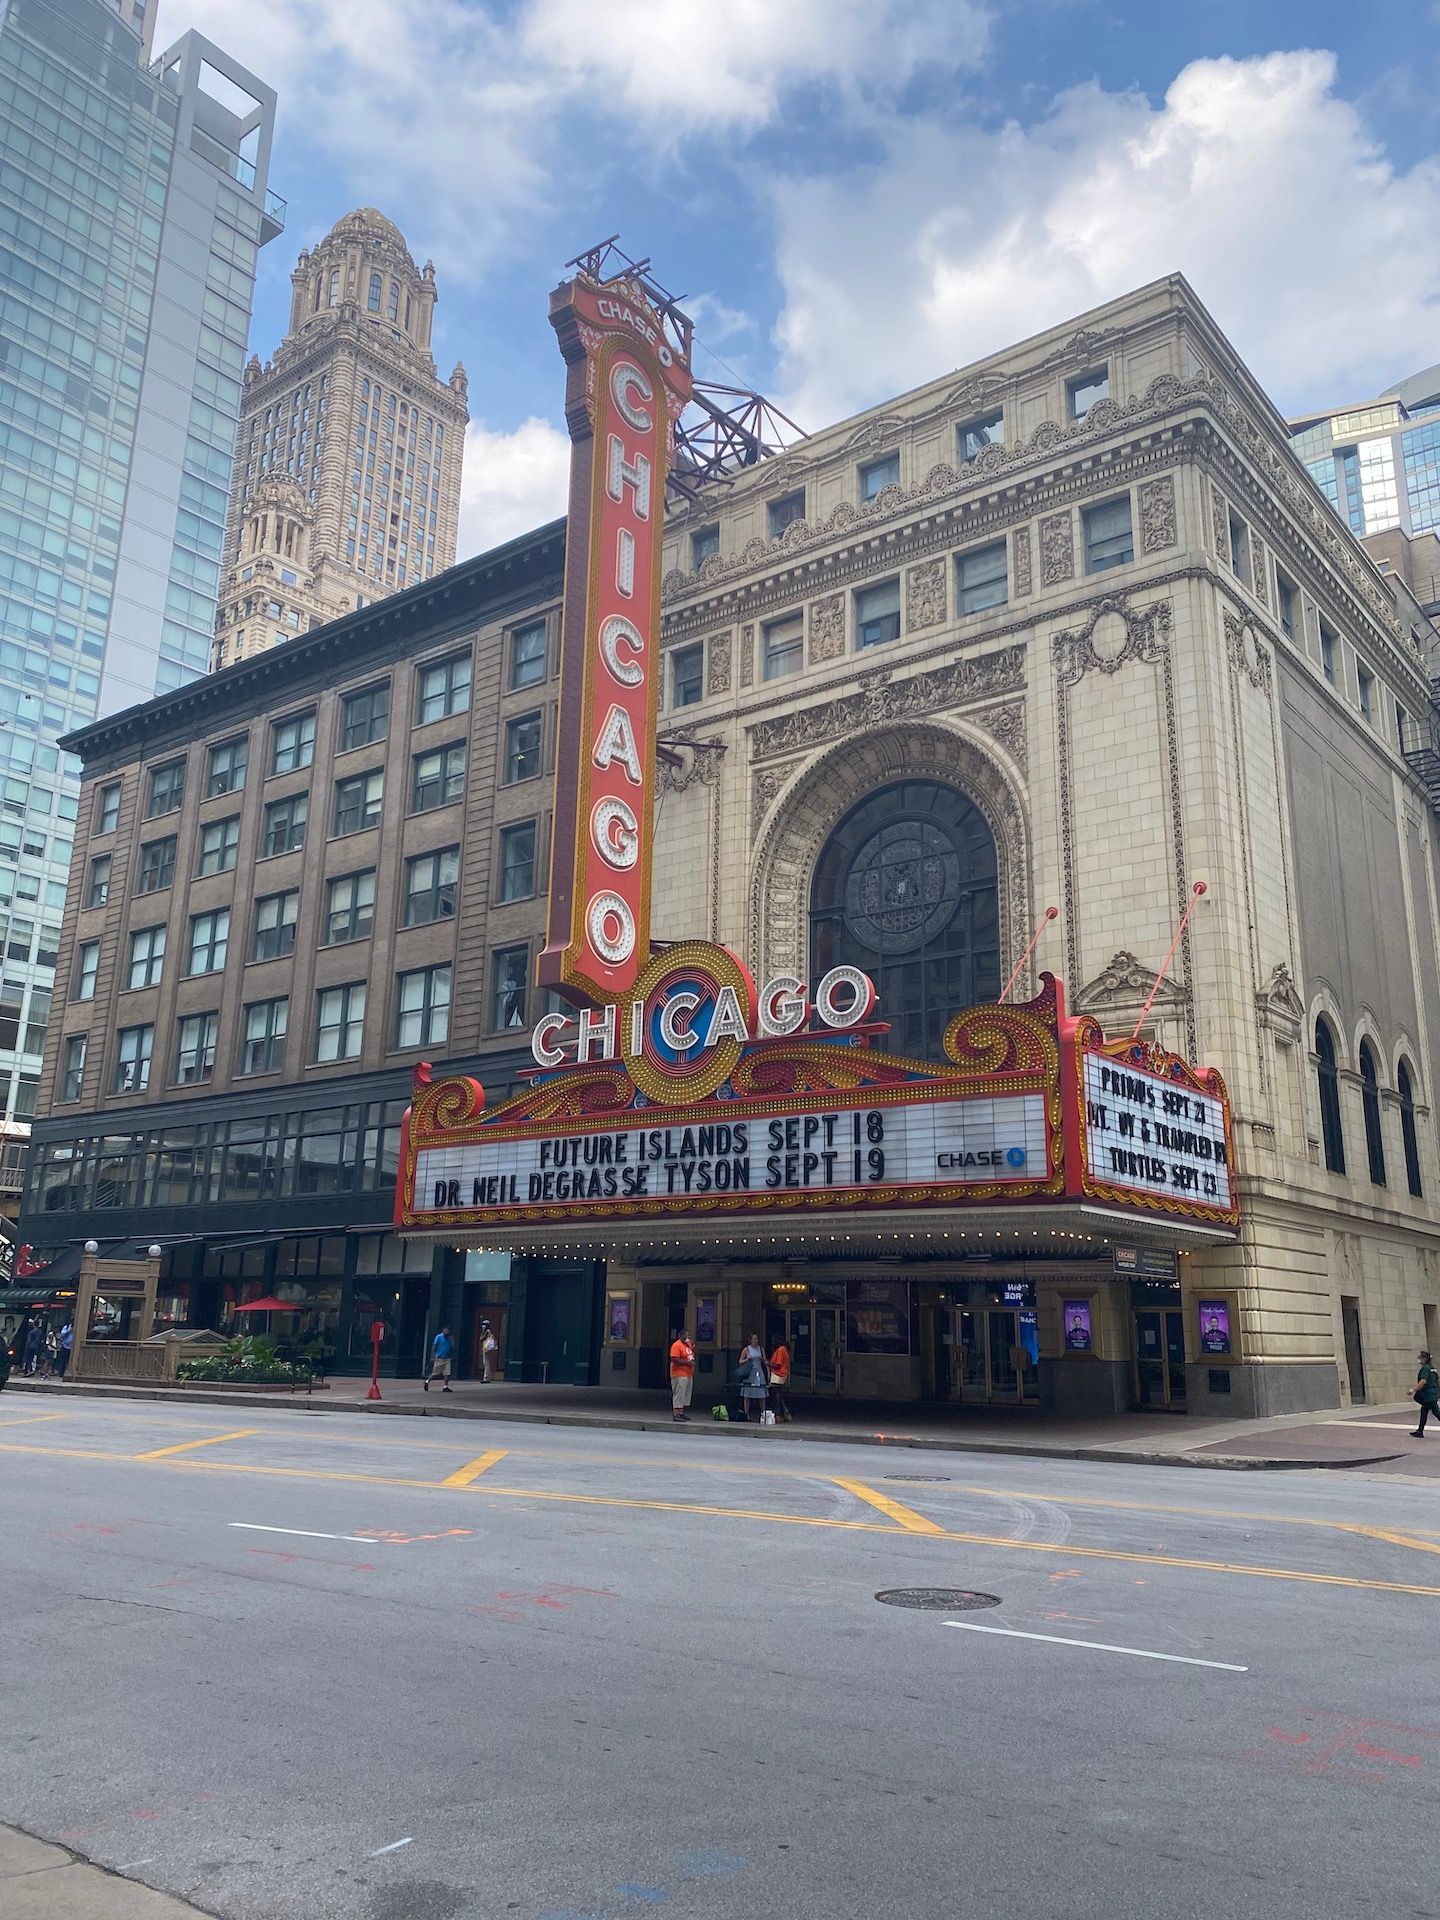 Photodump: Visiting Chicago 2021